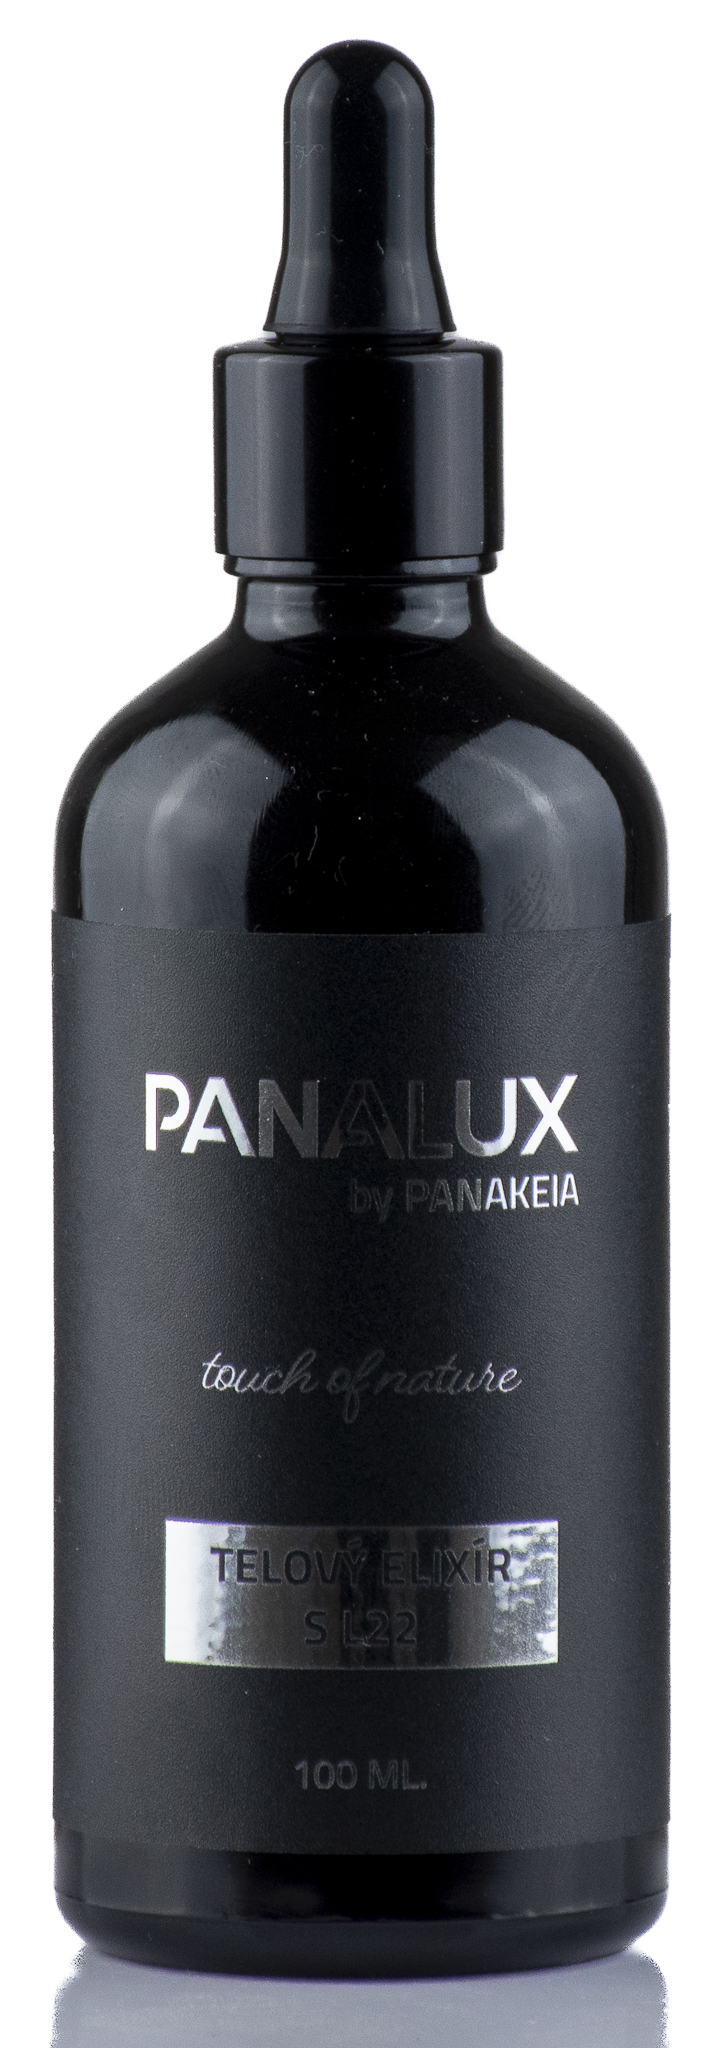 PANALUX by PANAKEIA Telový elixír s L22 100ml